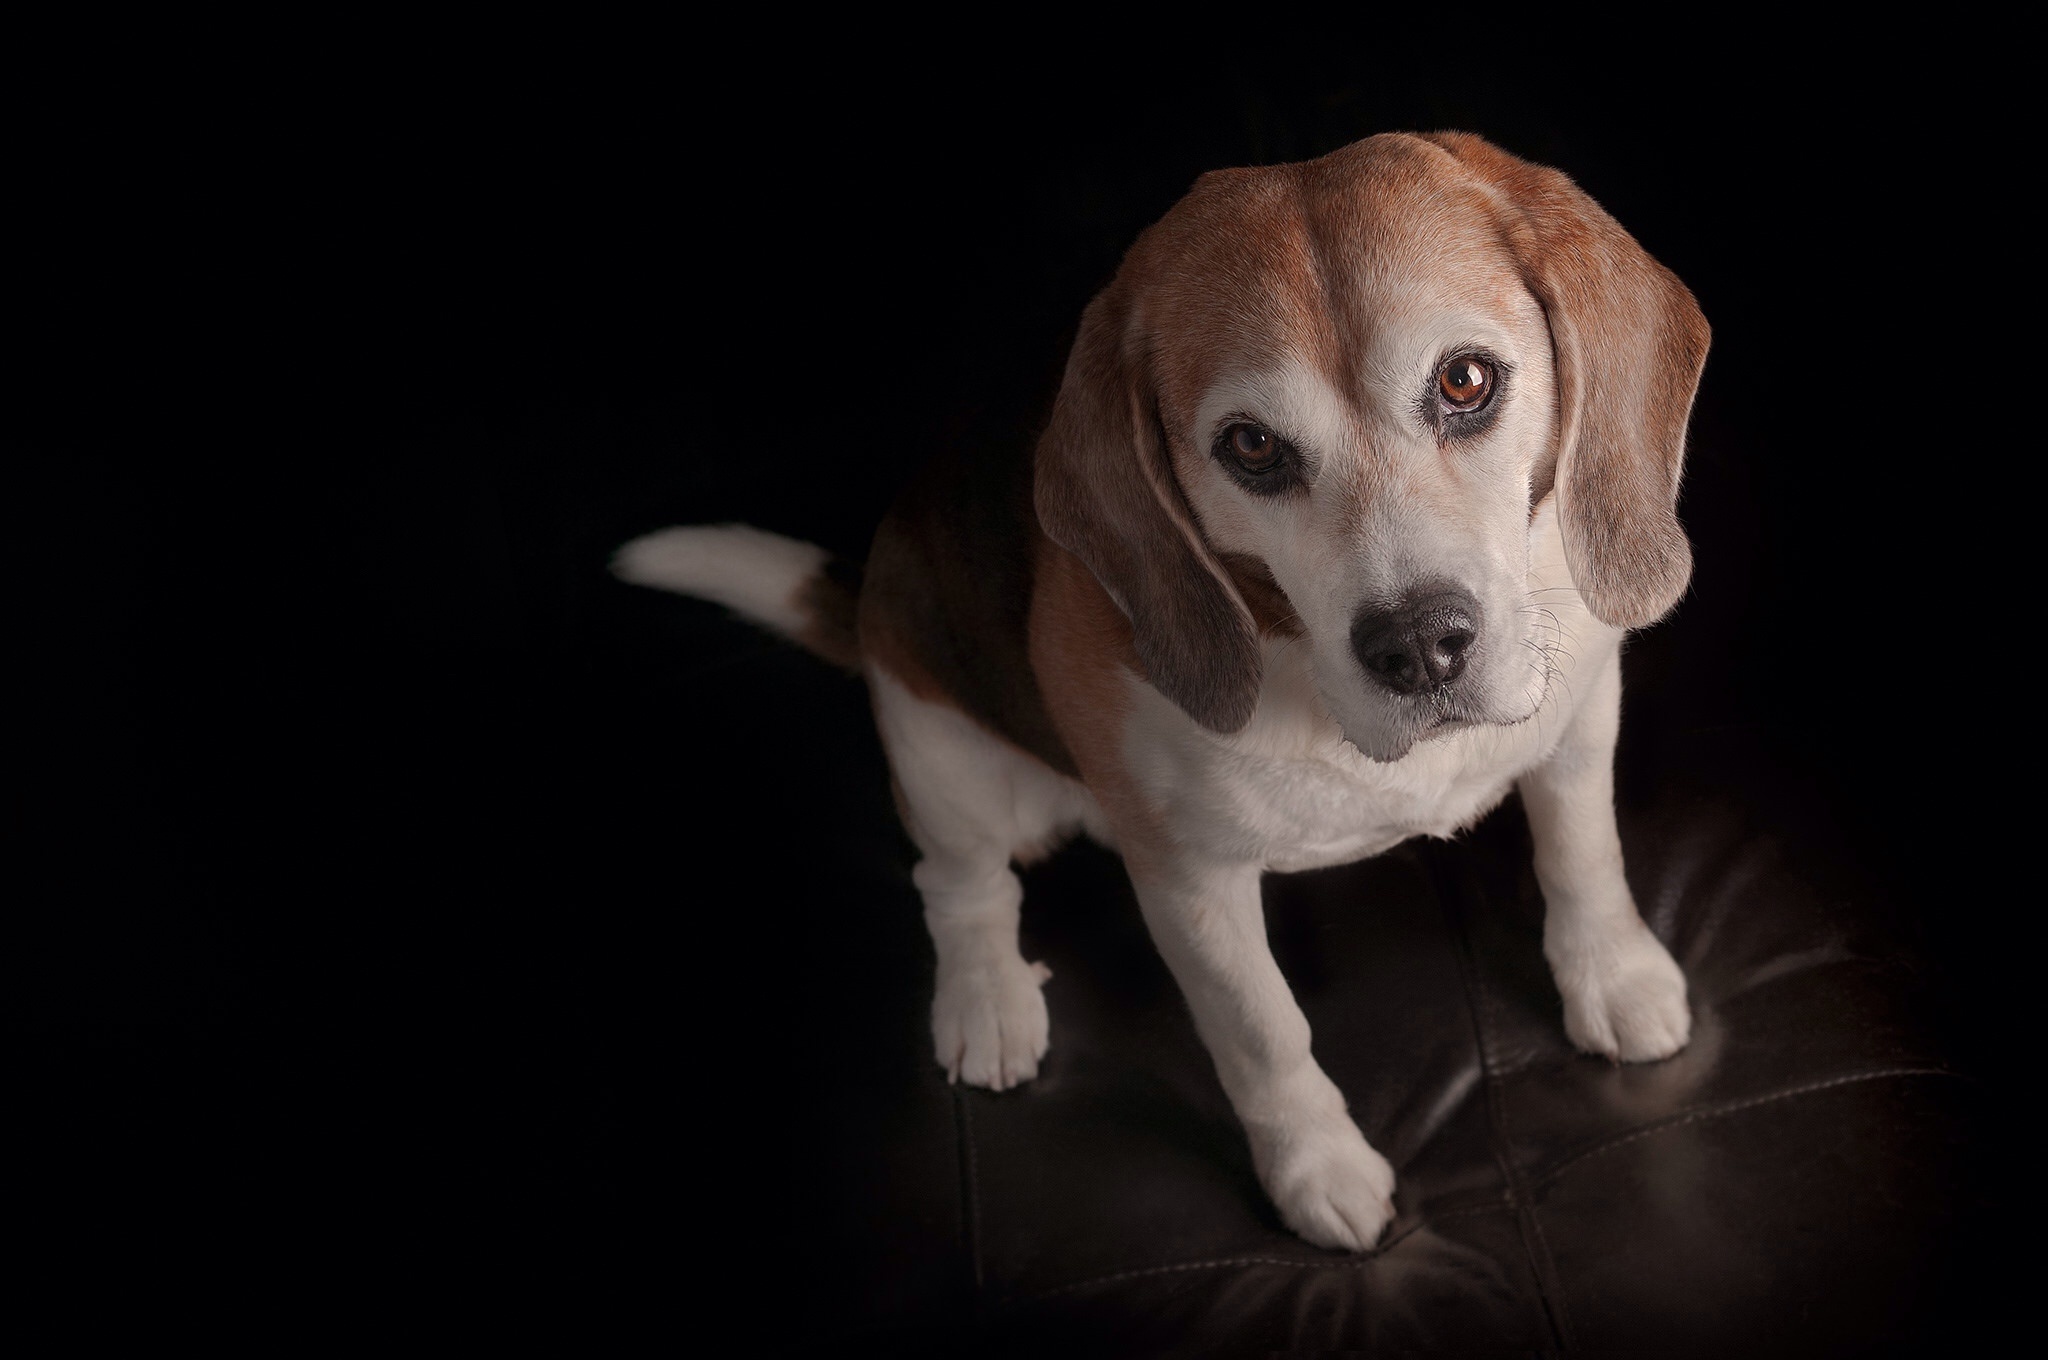 Baby Animal Beagle Dog Pet Puppy 2048x1360